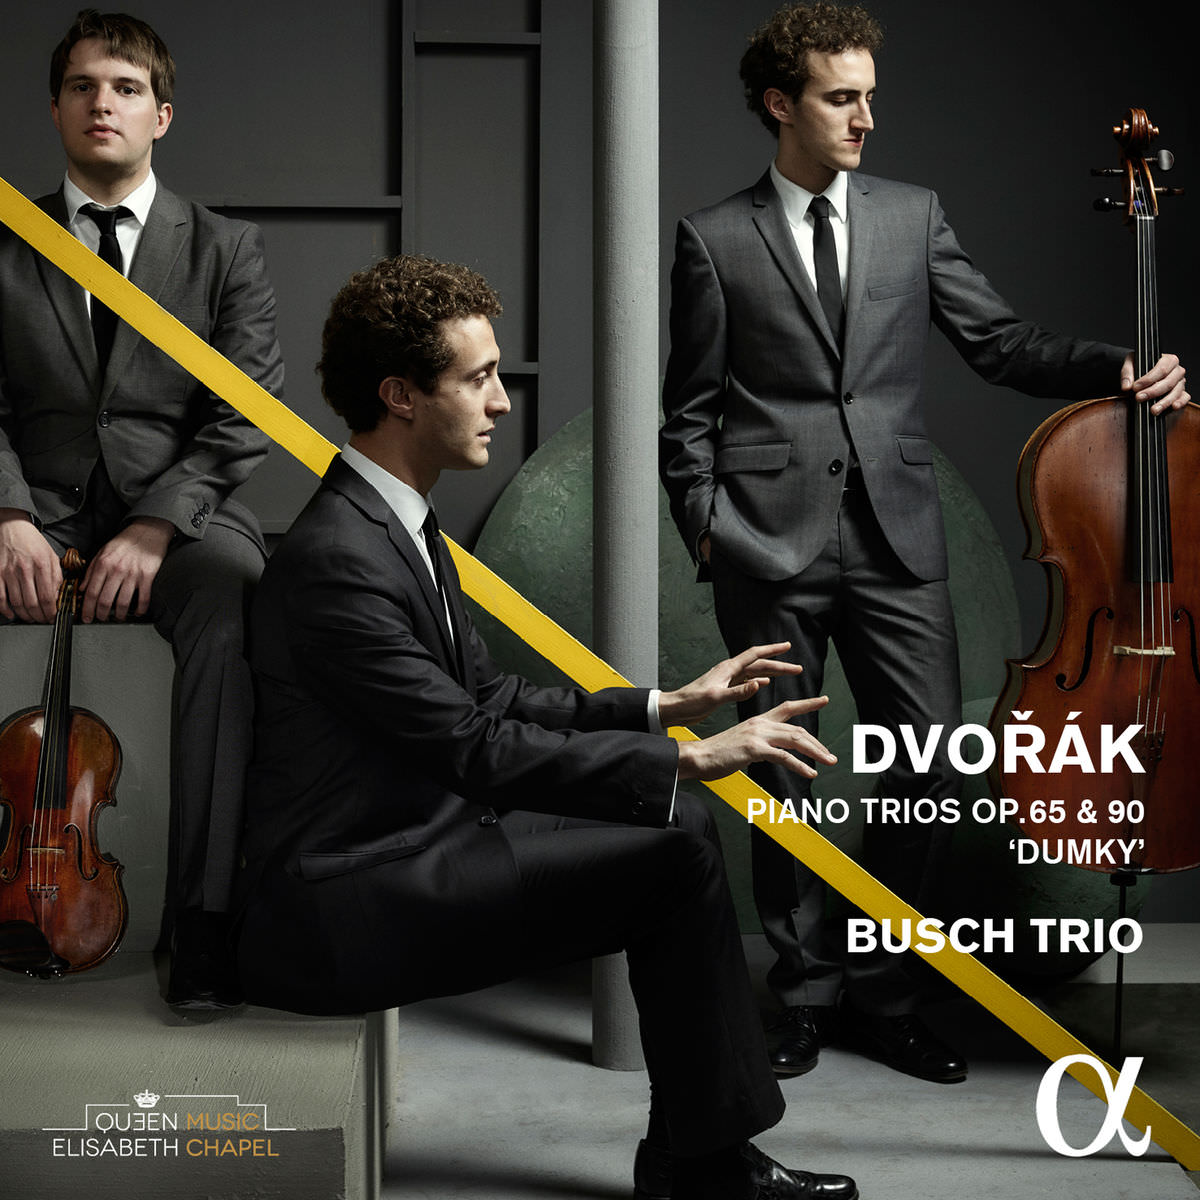 Busch Trio - Dvorak: Piano Trios, Op. 65 & 90 "Dumky" (2016) [FLAC 24bit/96kHz]